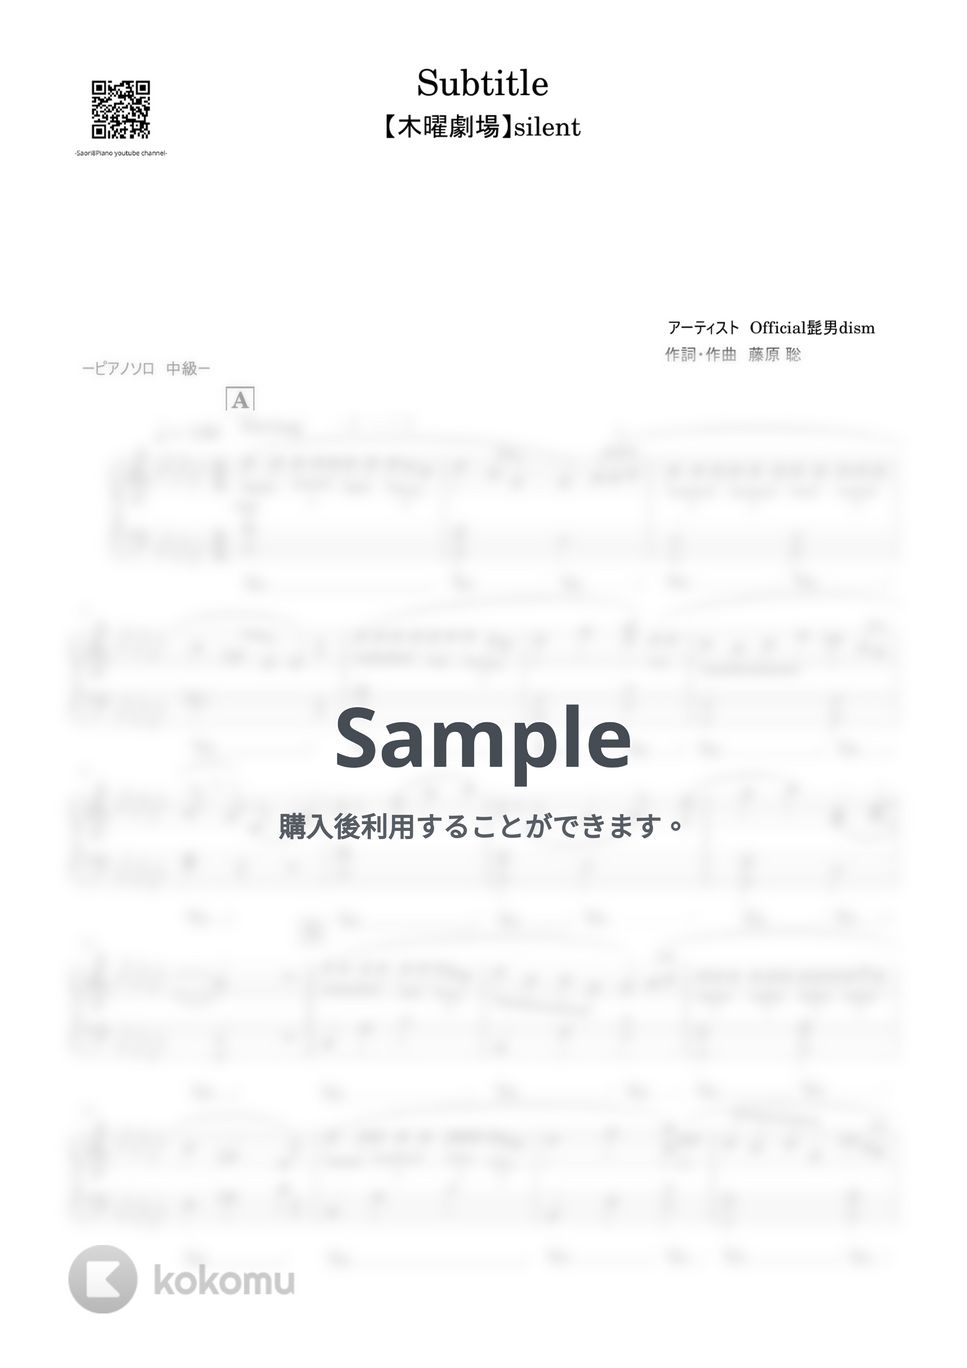 Official髭男dism - Subtitle (【ドラマ】Silent/中級レベル) by Saori8Piano